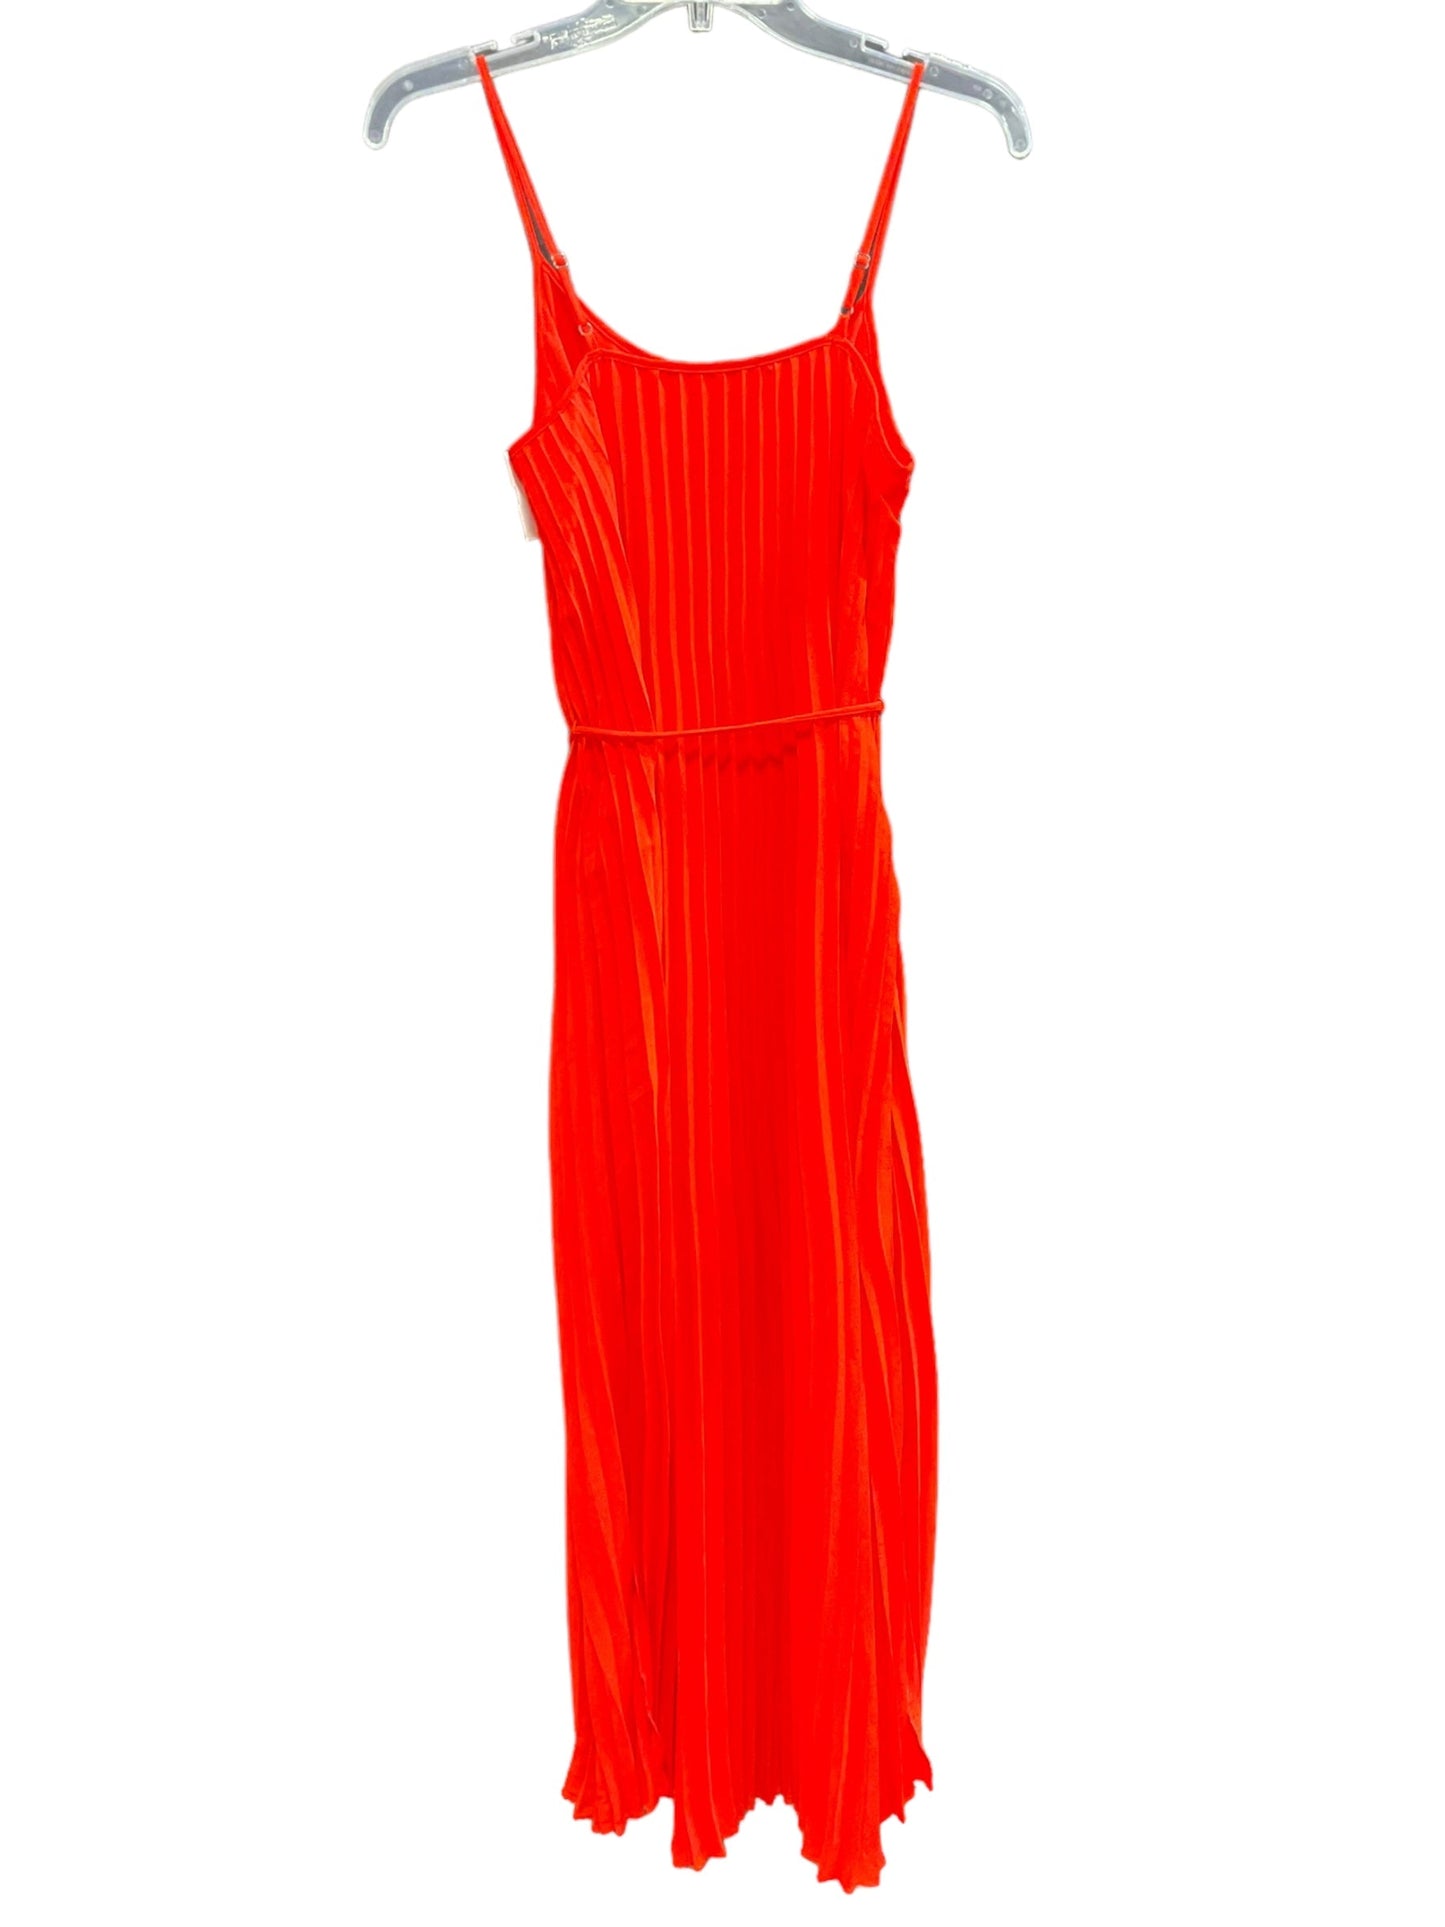 Orange Dress Casual Maxi Banana Republic, Size 0